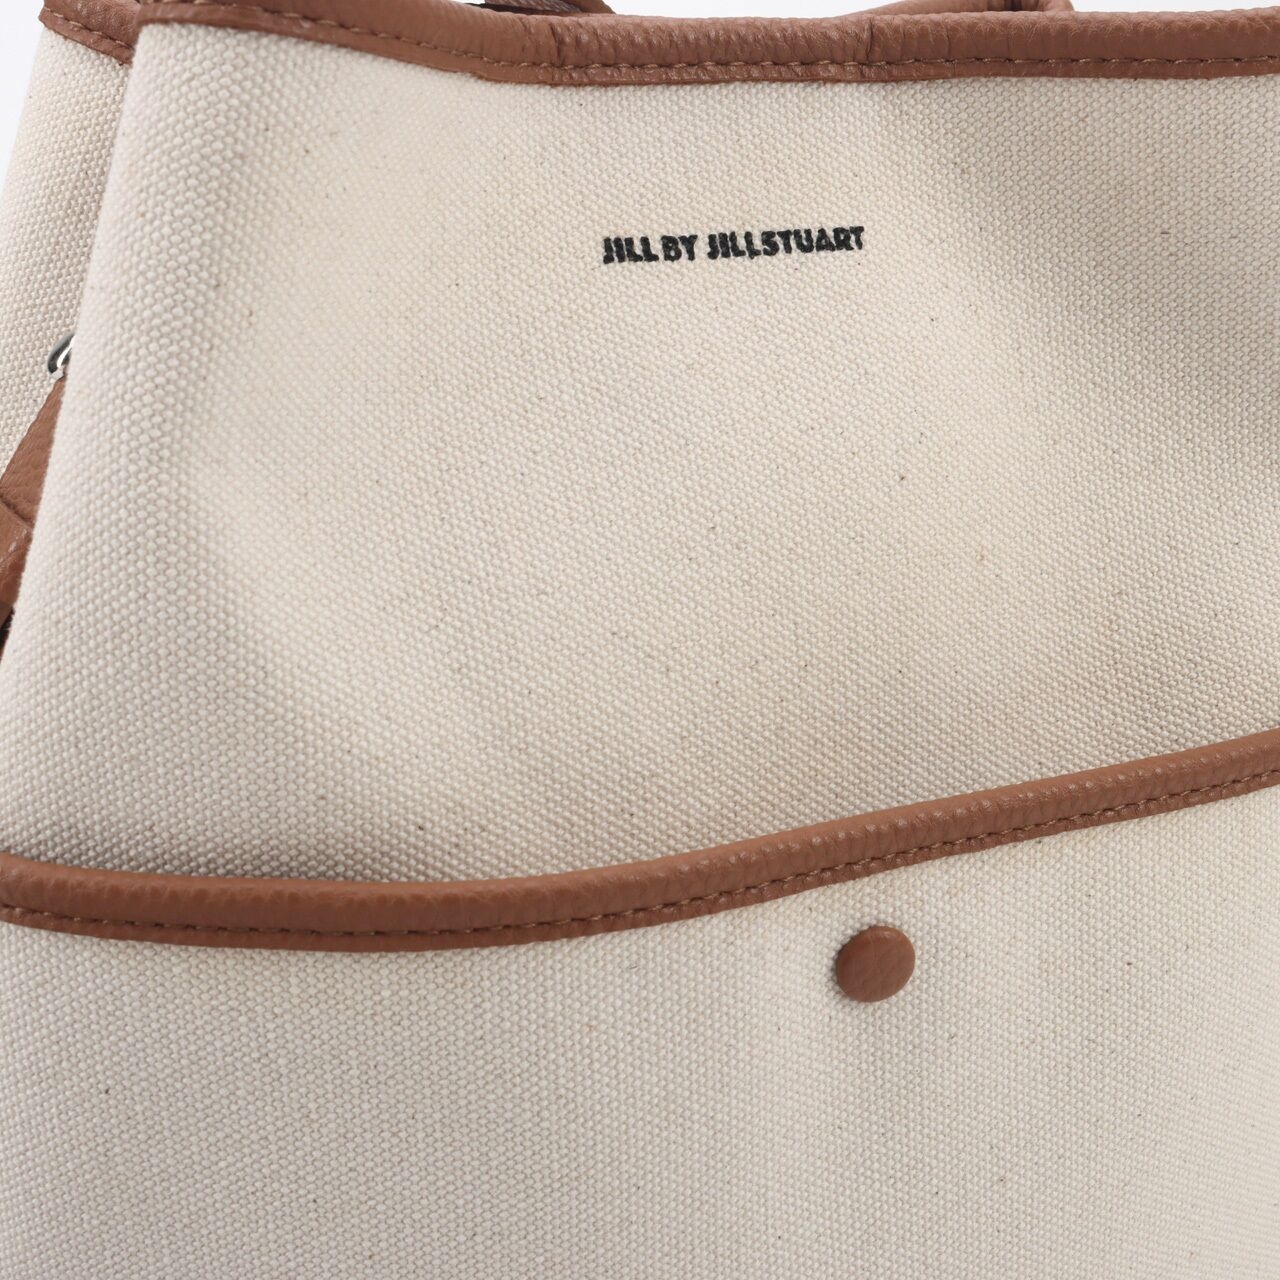 Jill by Jill Stuart GENIE Canvas and Leather Color Combination Shoulder Bag JLBA1F559W2